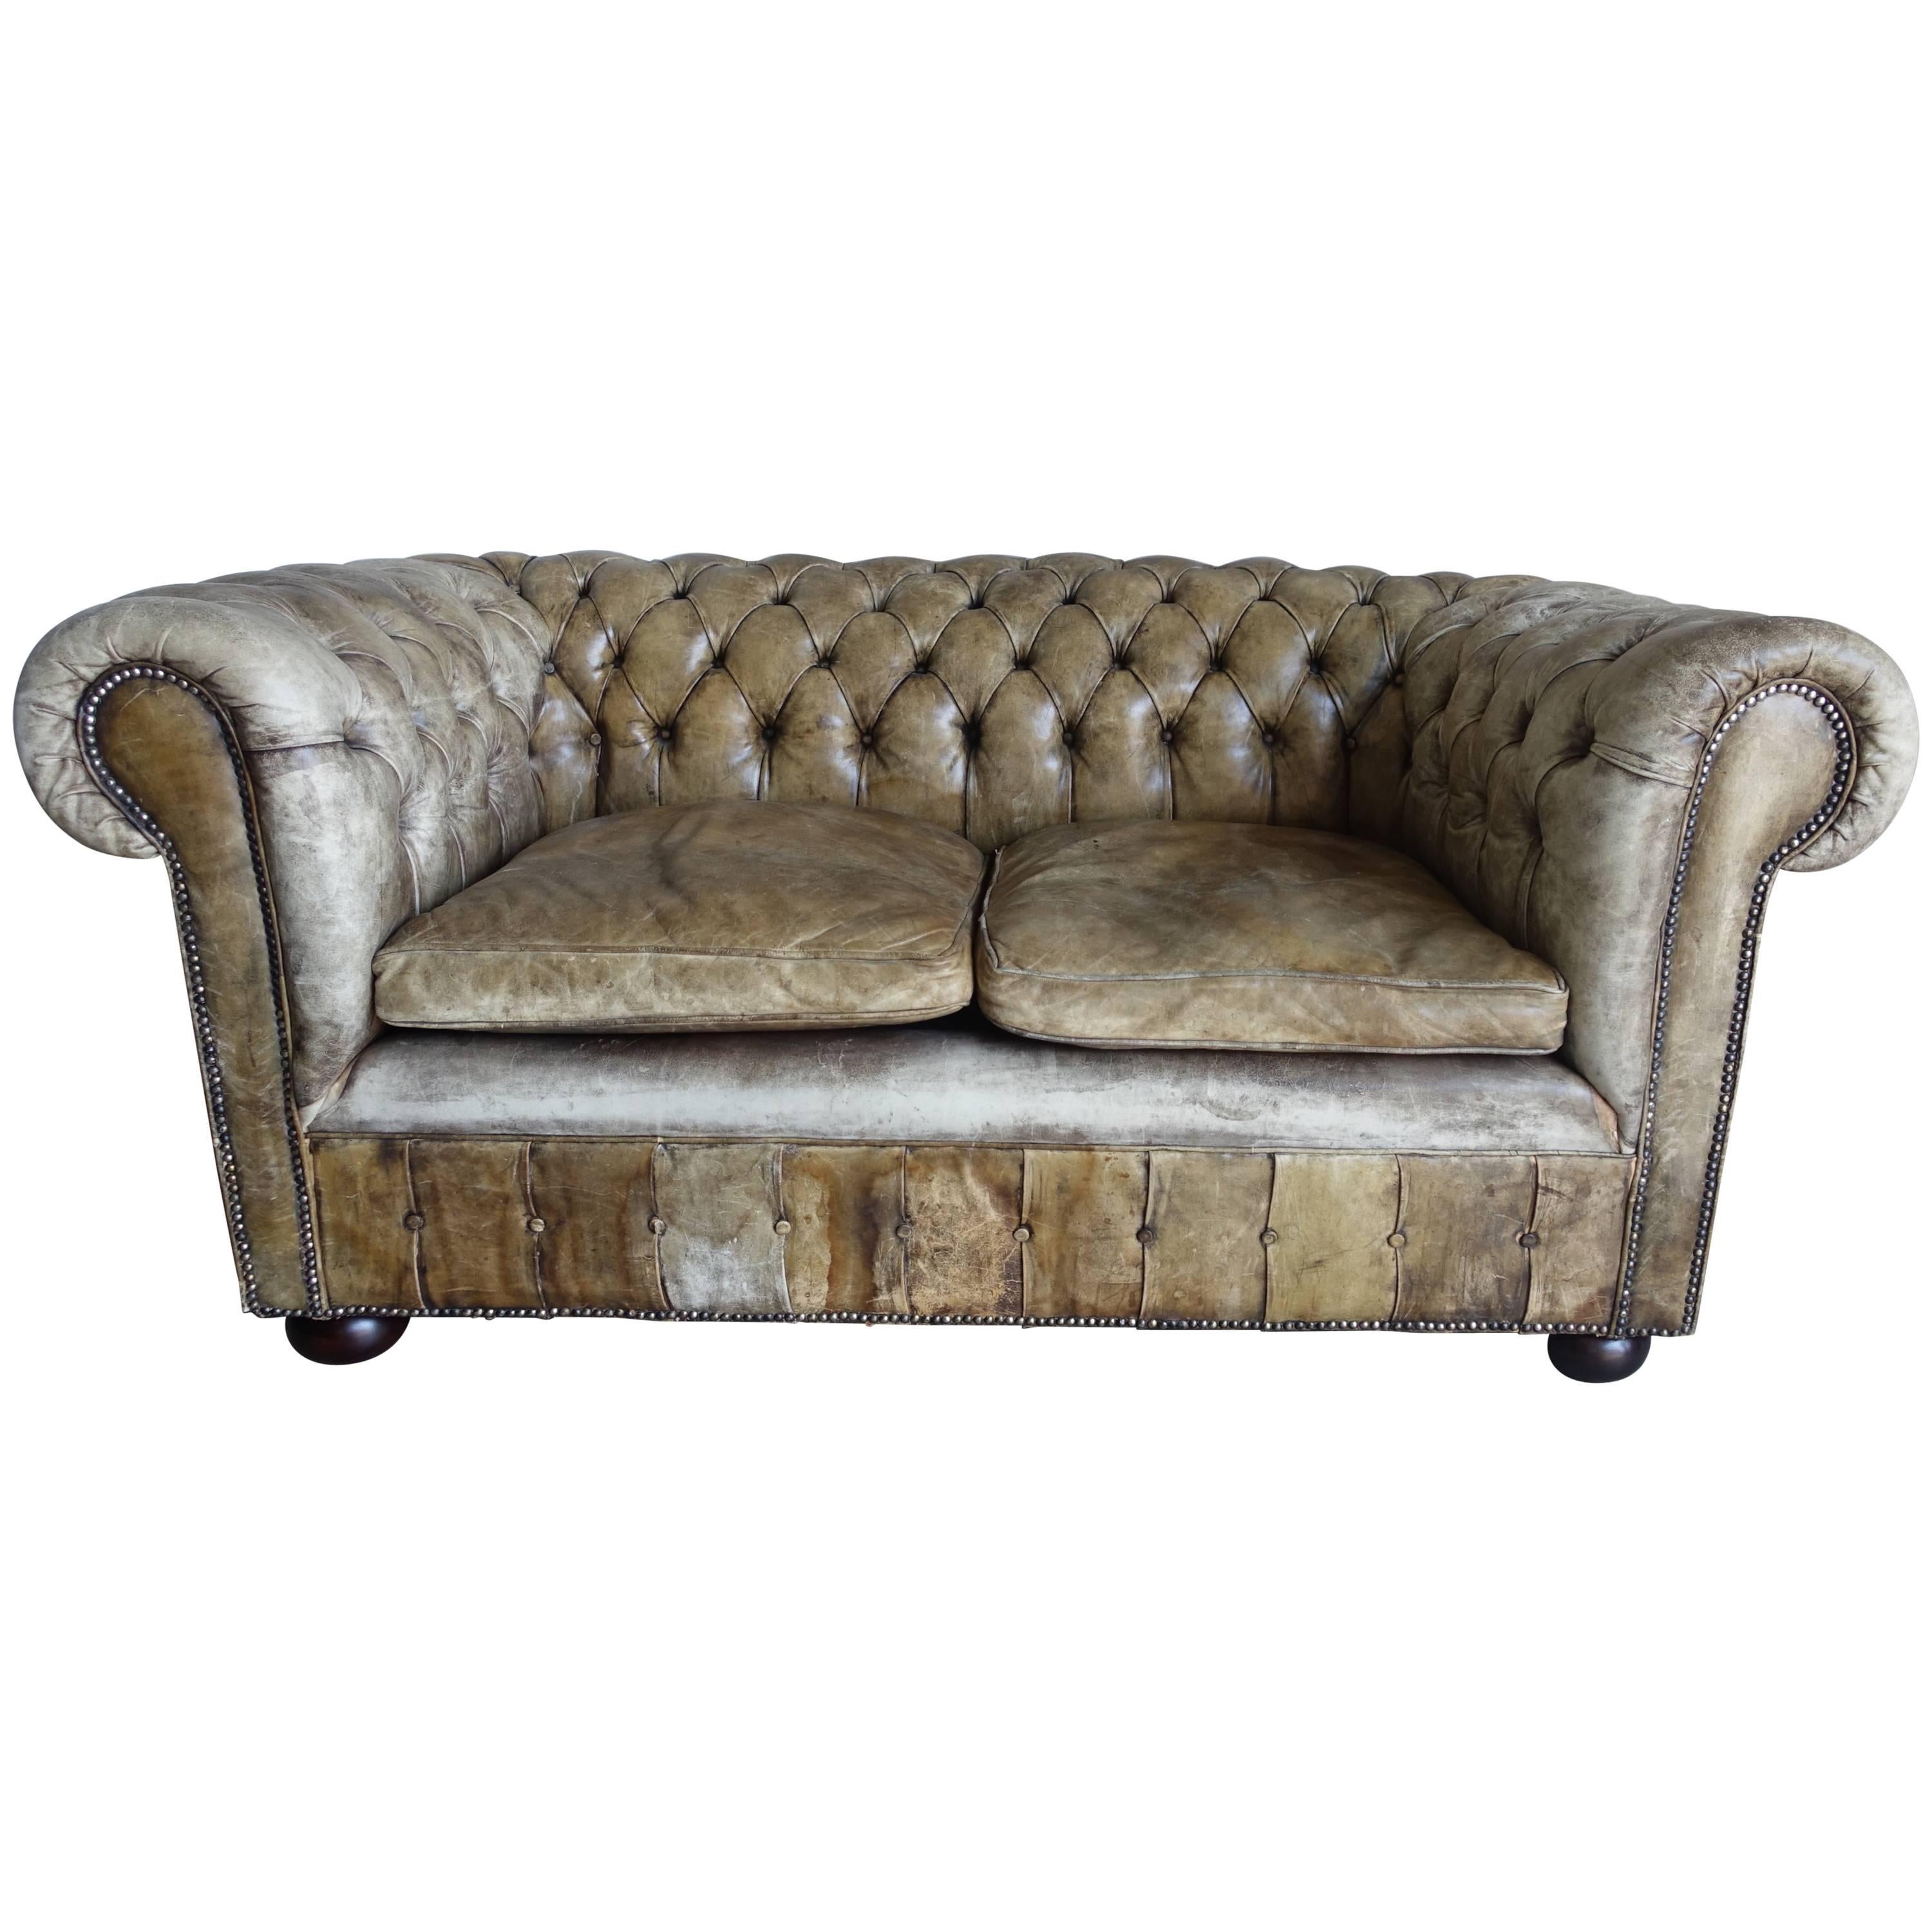 English Chesterfield Leather Sofa, circa 1900